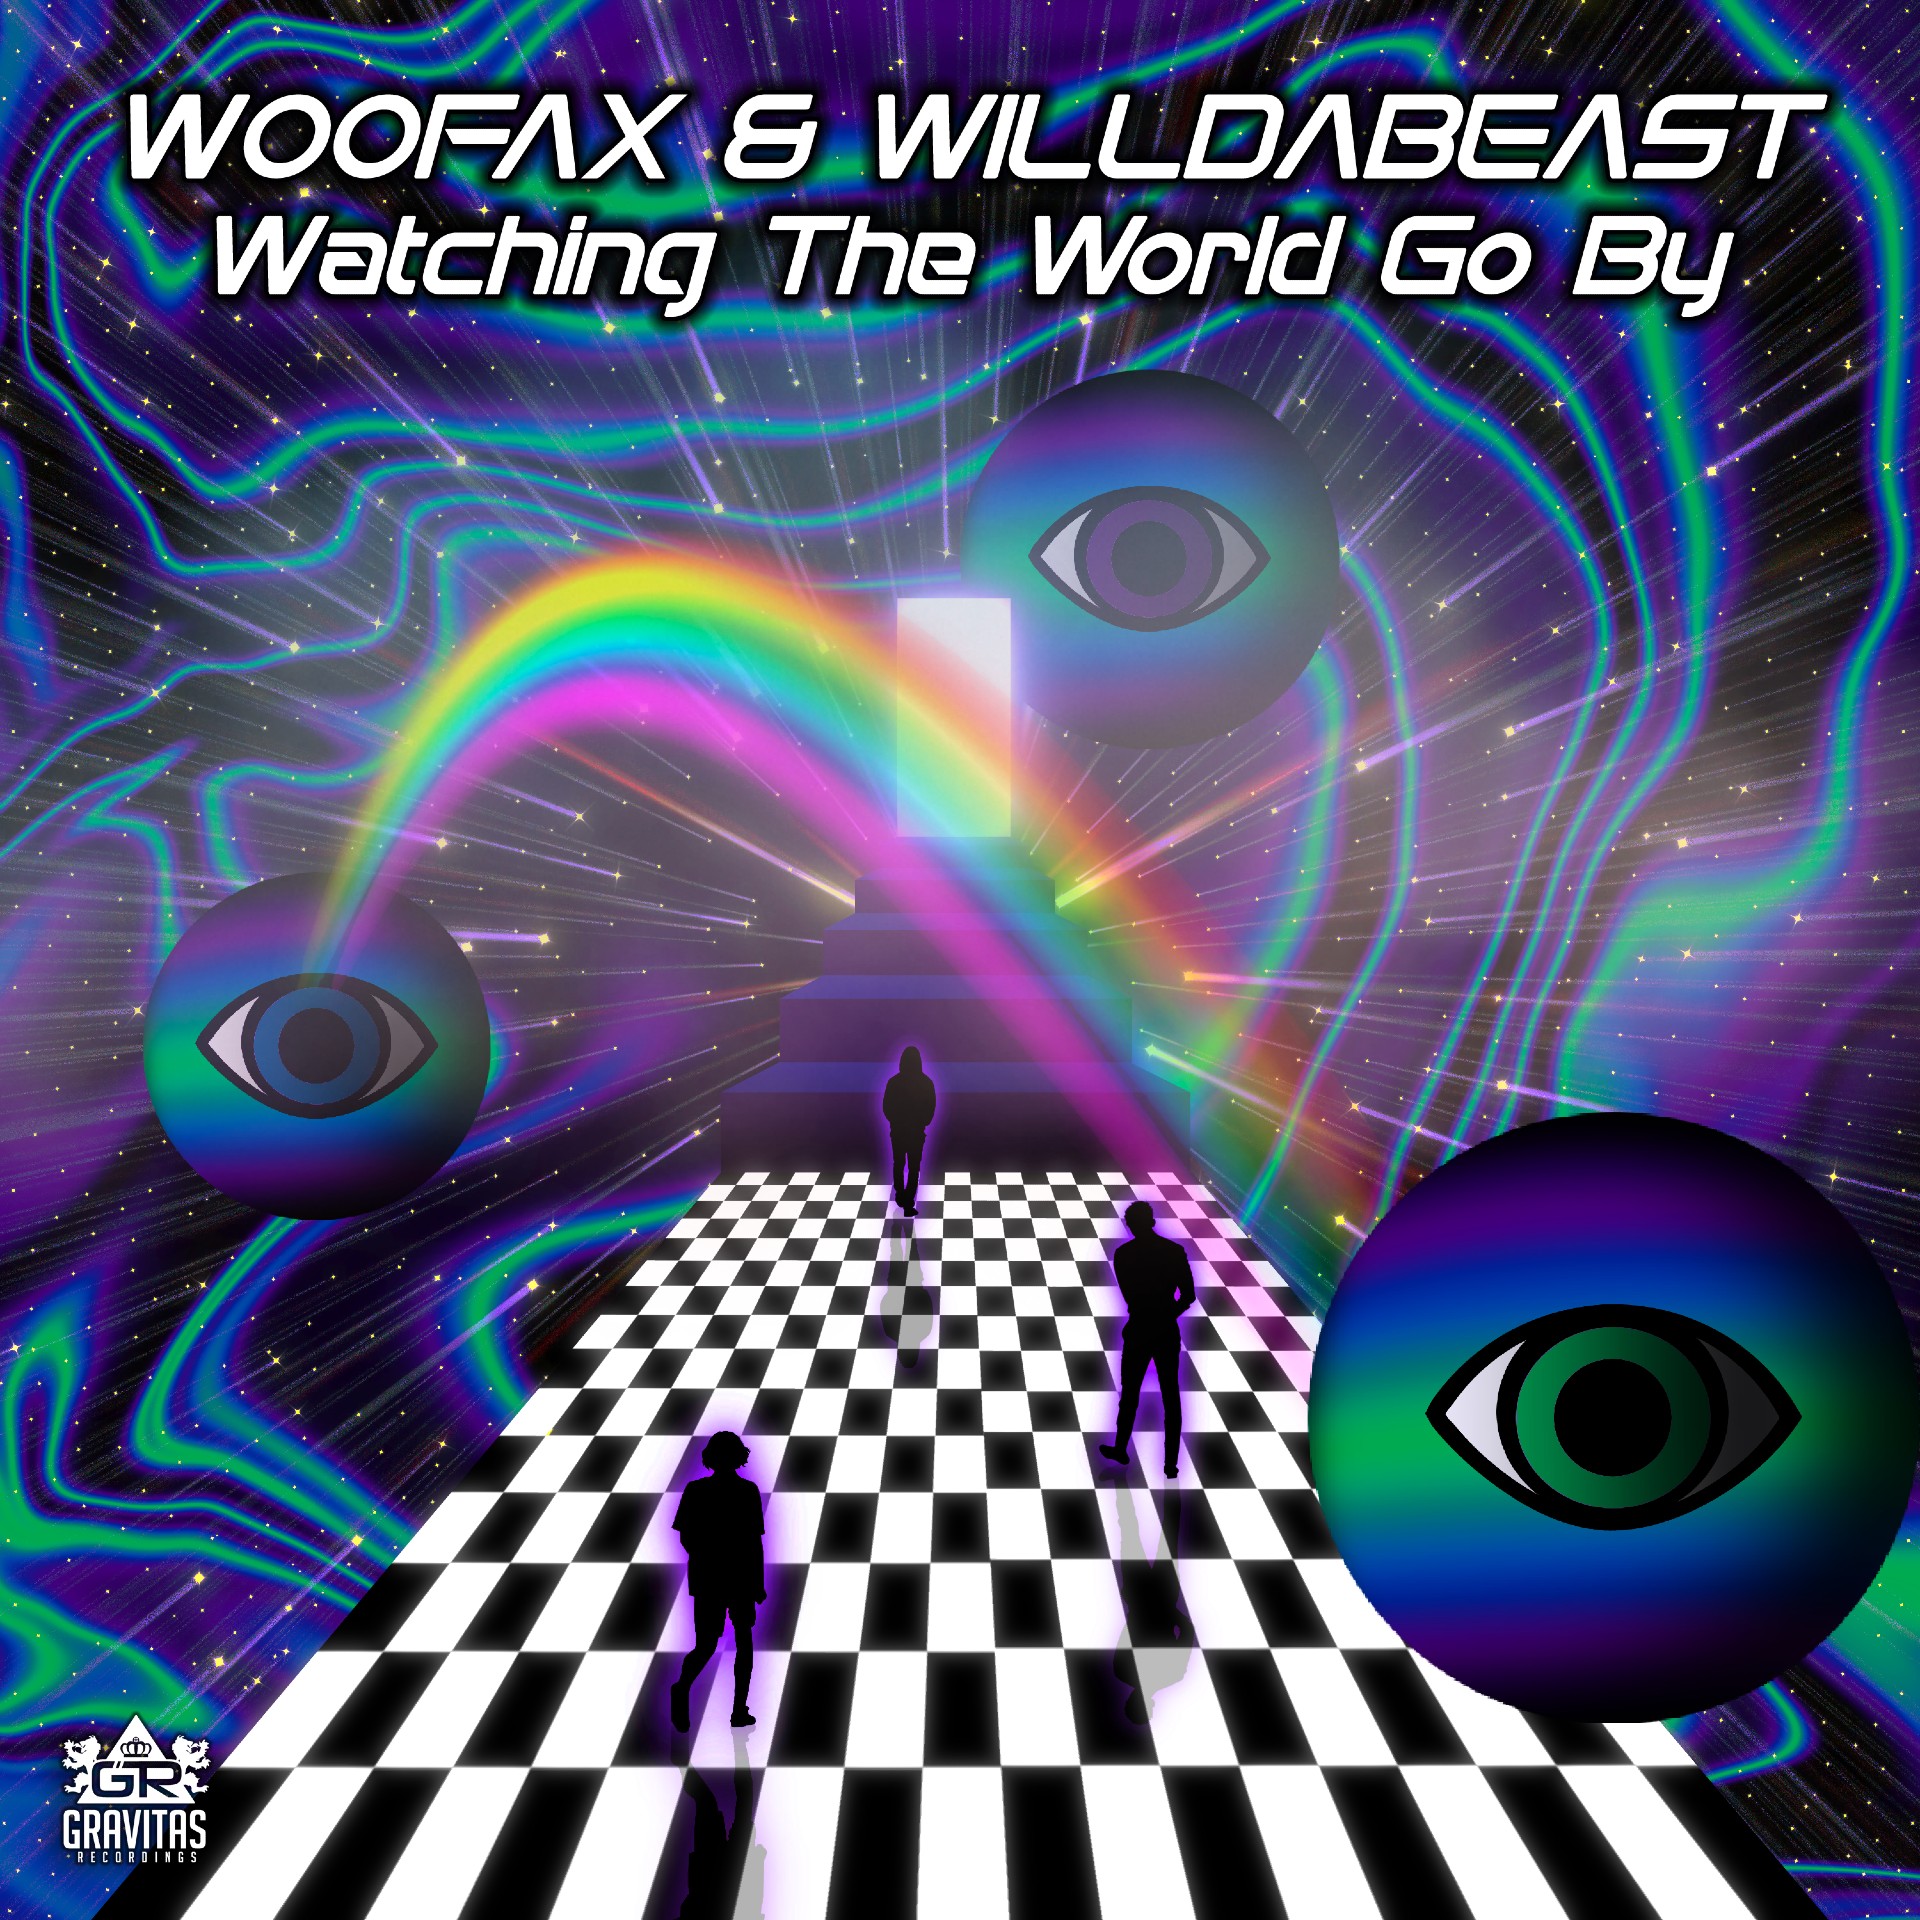 Woofax & Willdabeast ‘Watching The World Go By’ album artwork